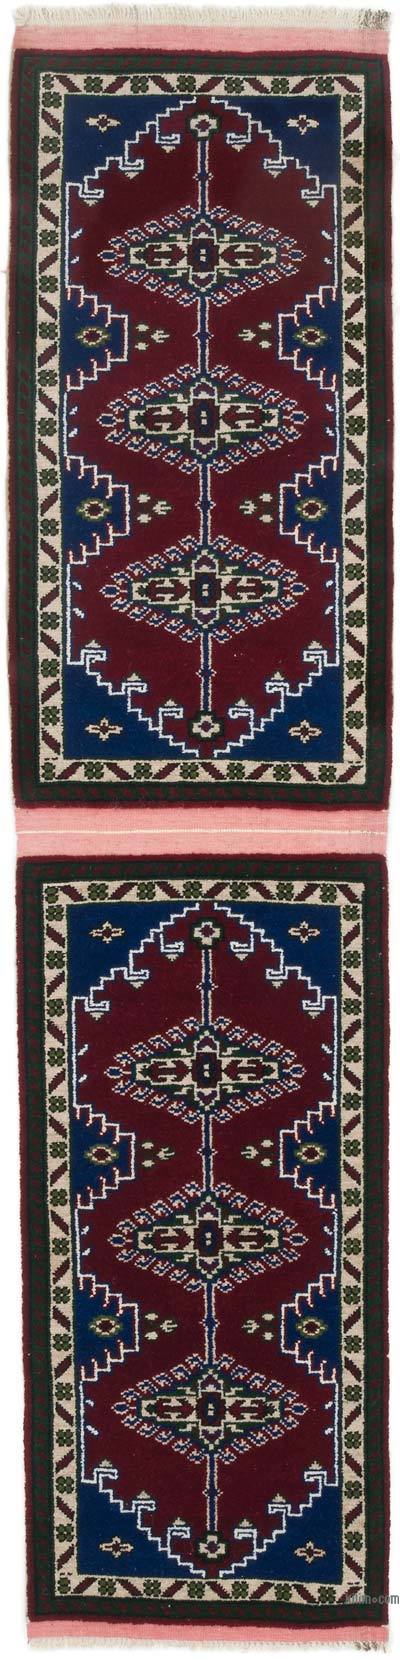 Rug Turkish rug 2'2 x 13'4 Ft Hallway runner Vintage rug Tribal rug runner Gorgeous hand woven vintage afghan maldari kilim runner rug